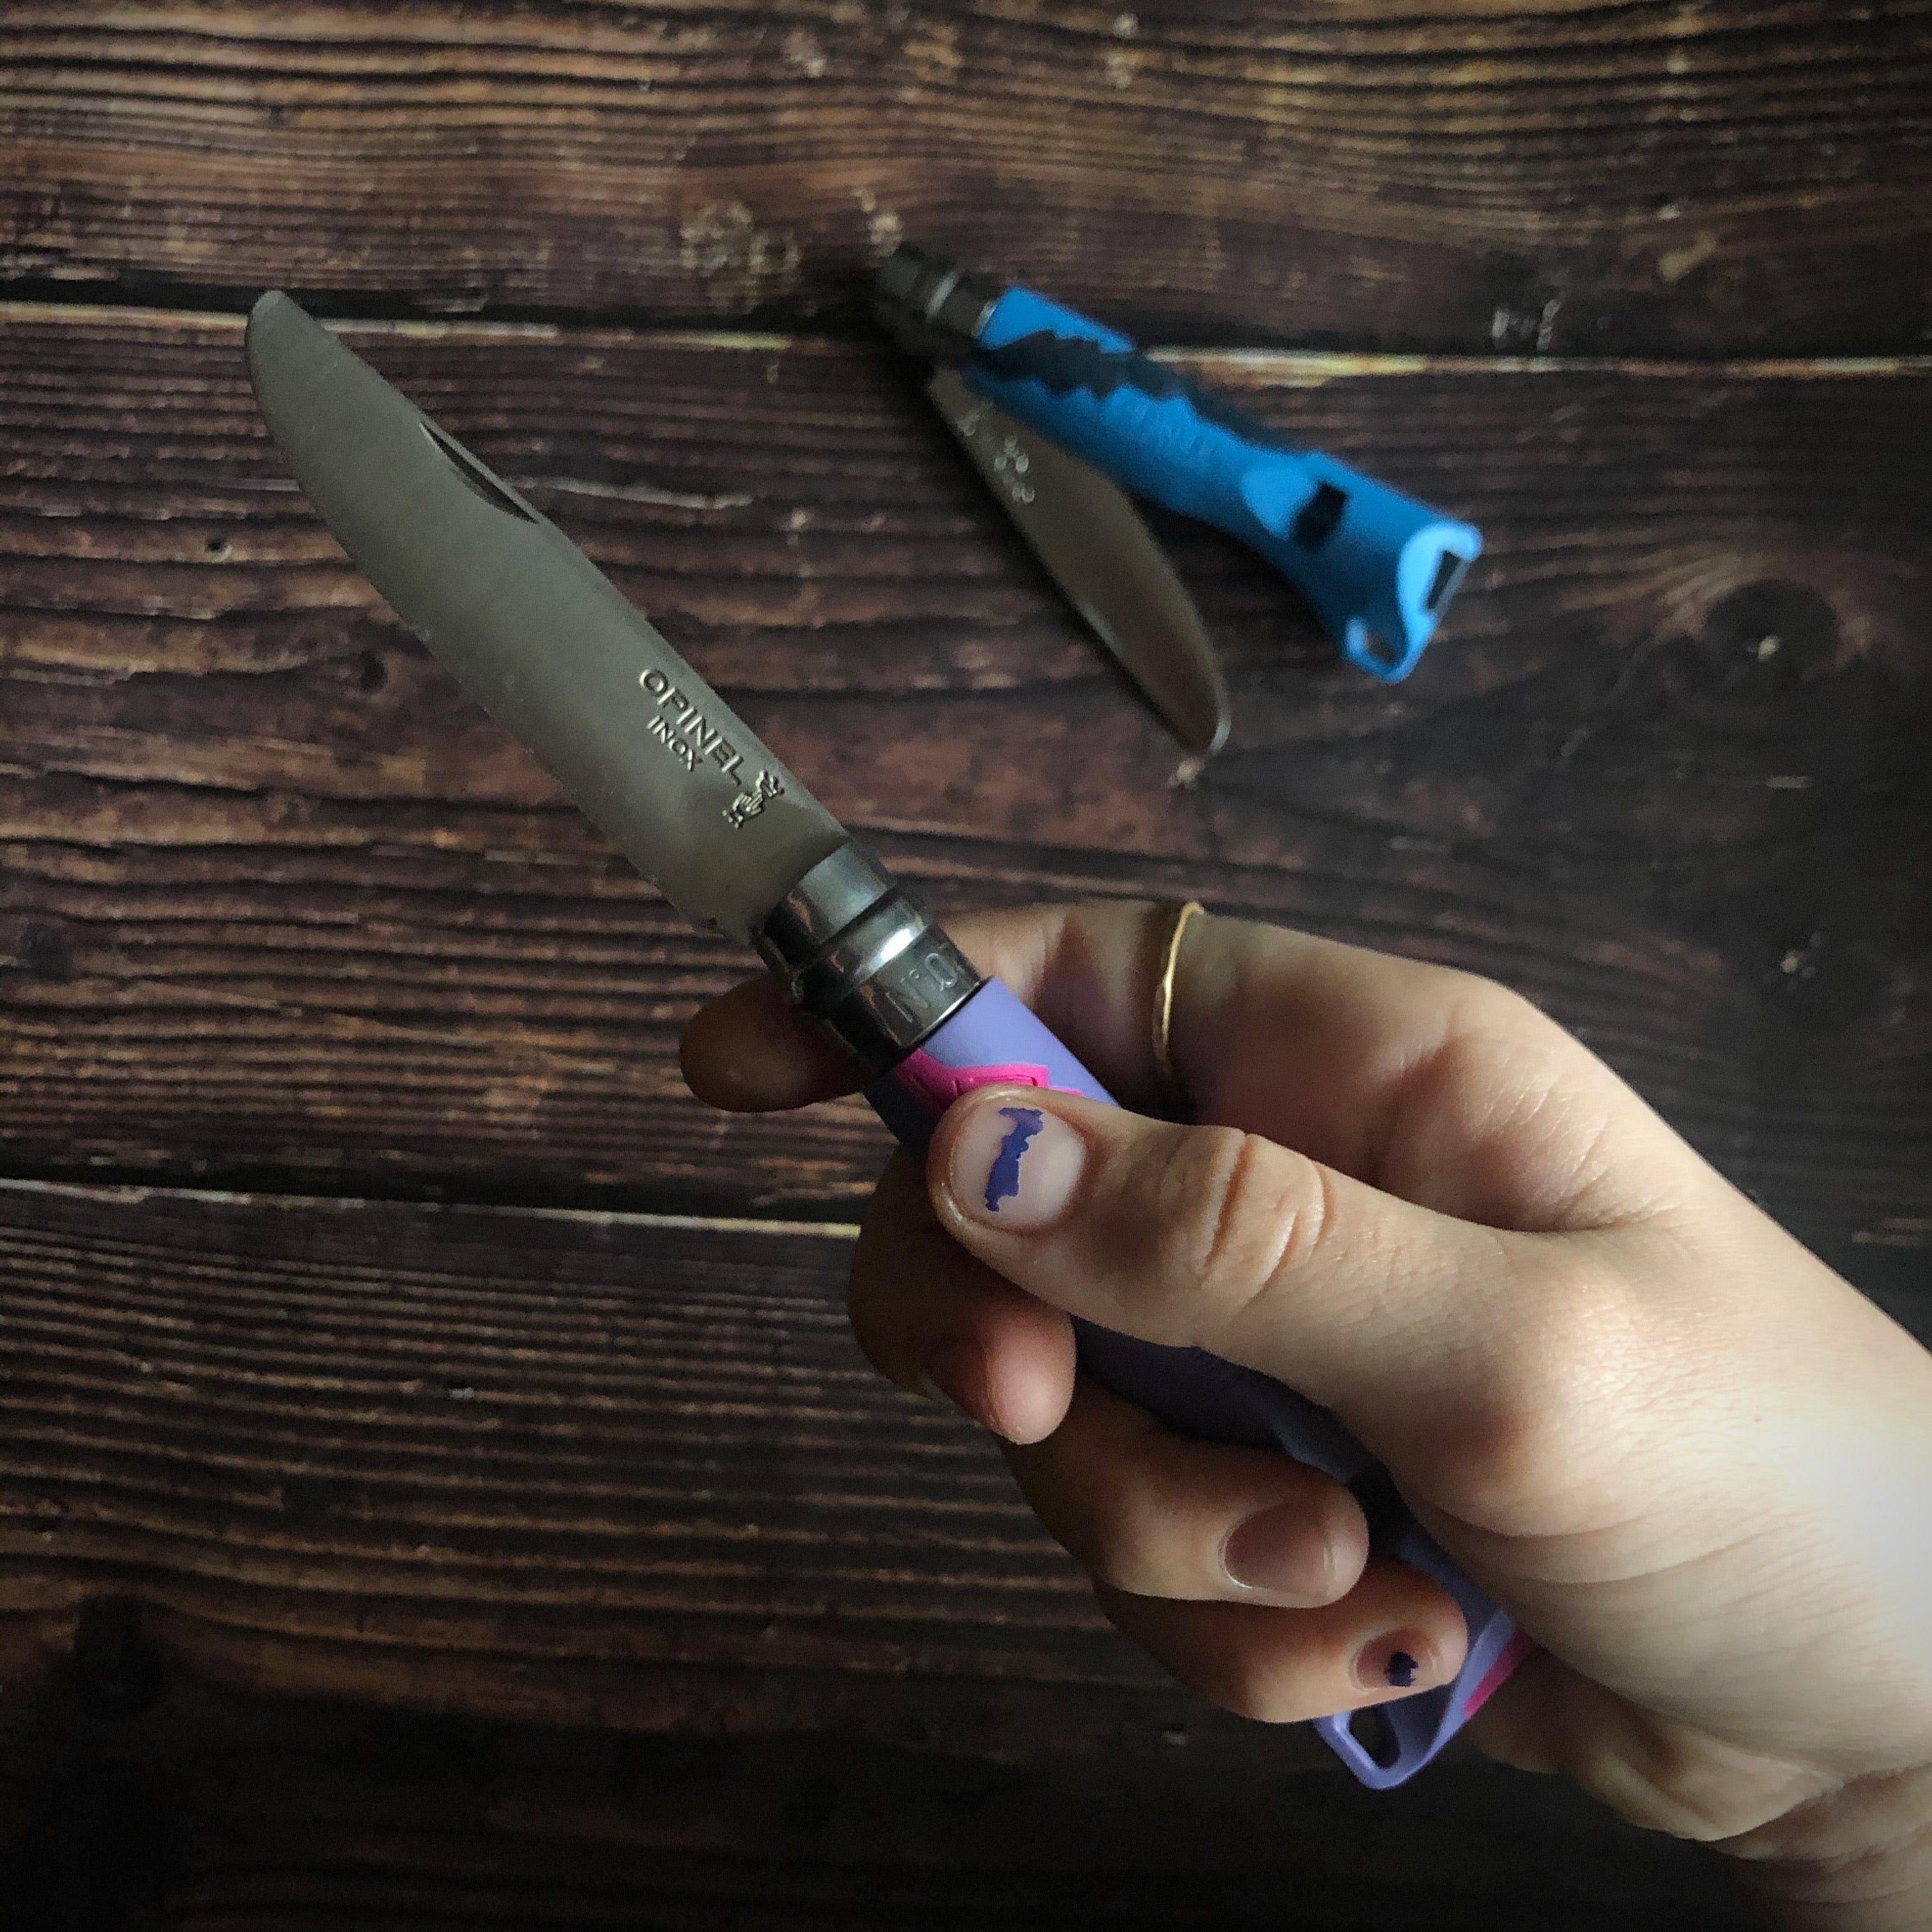 Kids Pocket Knife and Survival Kit – Truly Garden